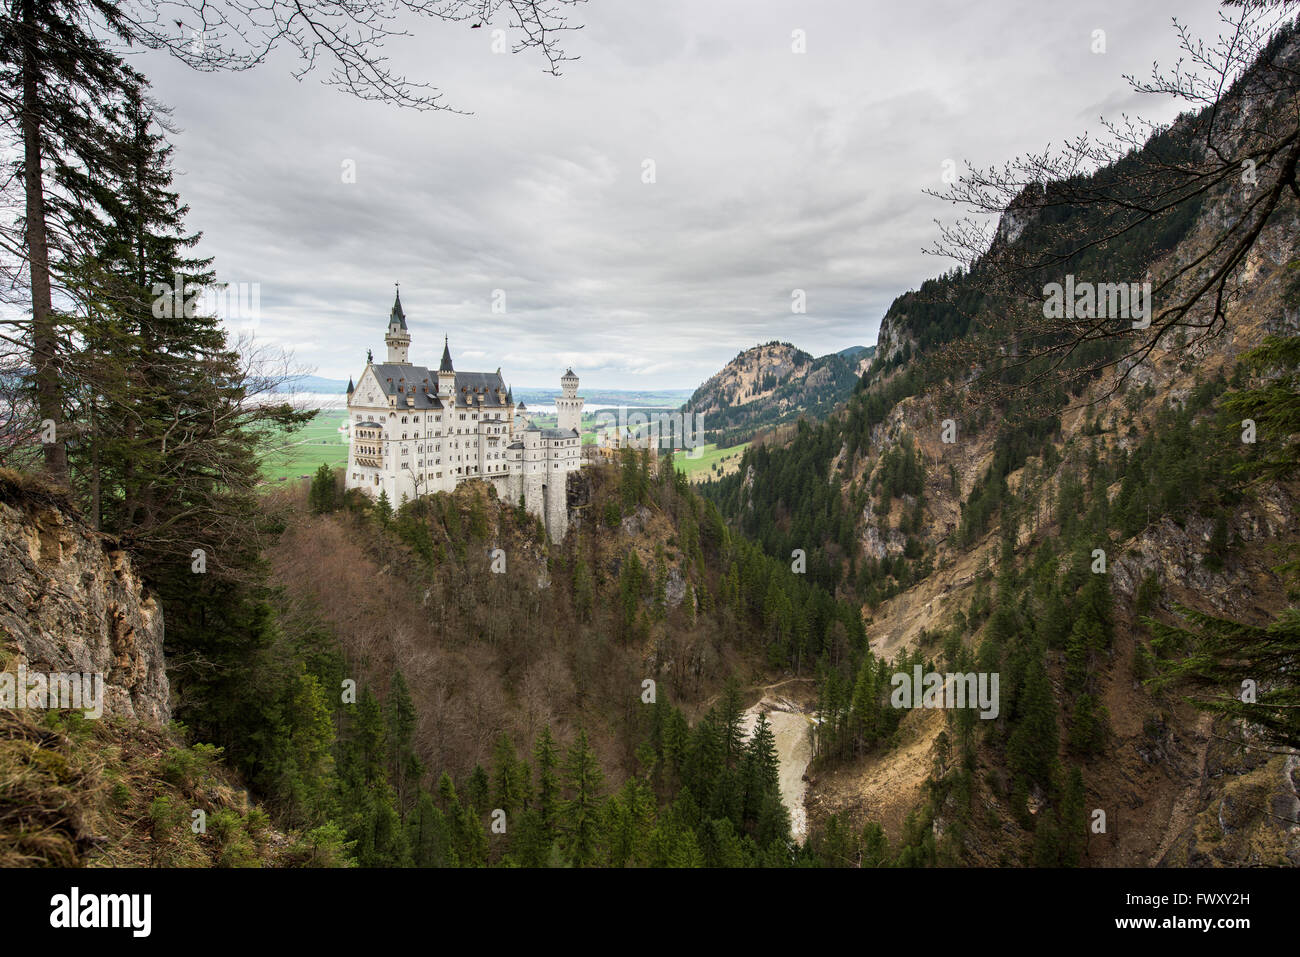 Neuschwanstein castle in Bavaria Germany Stock Photo